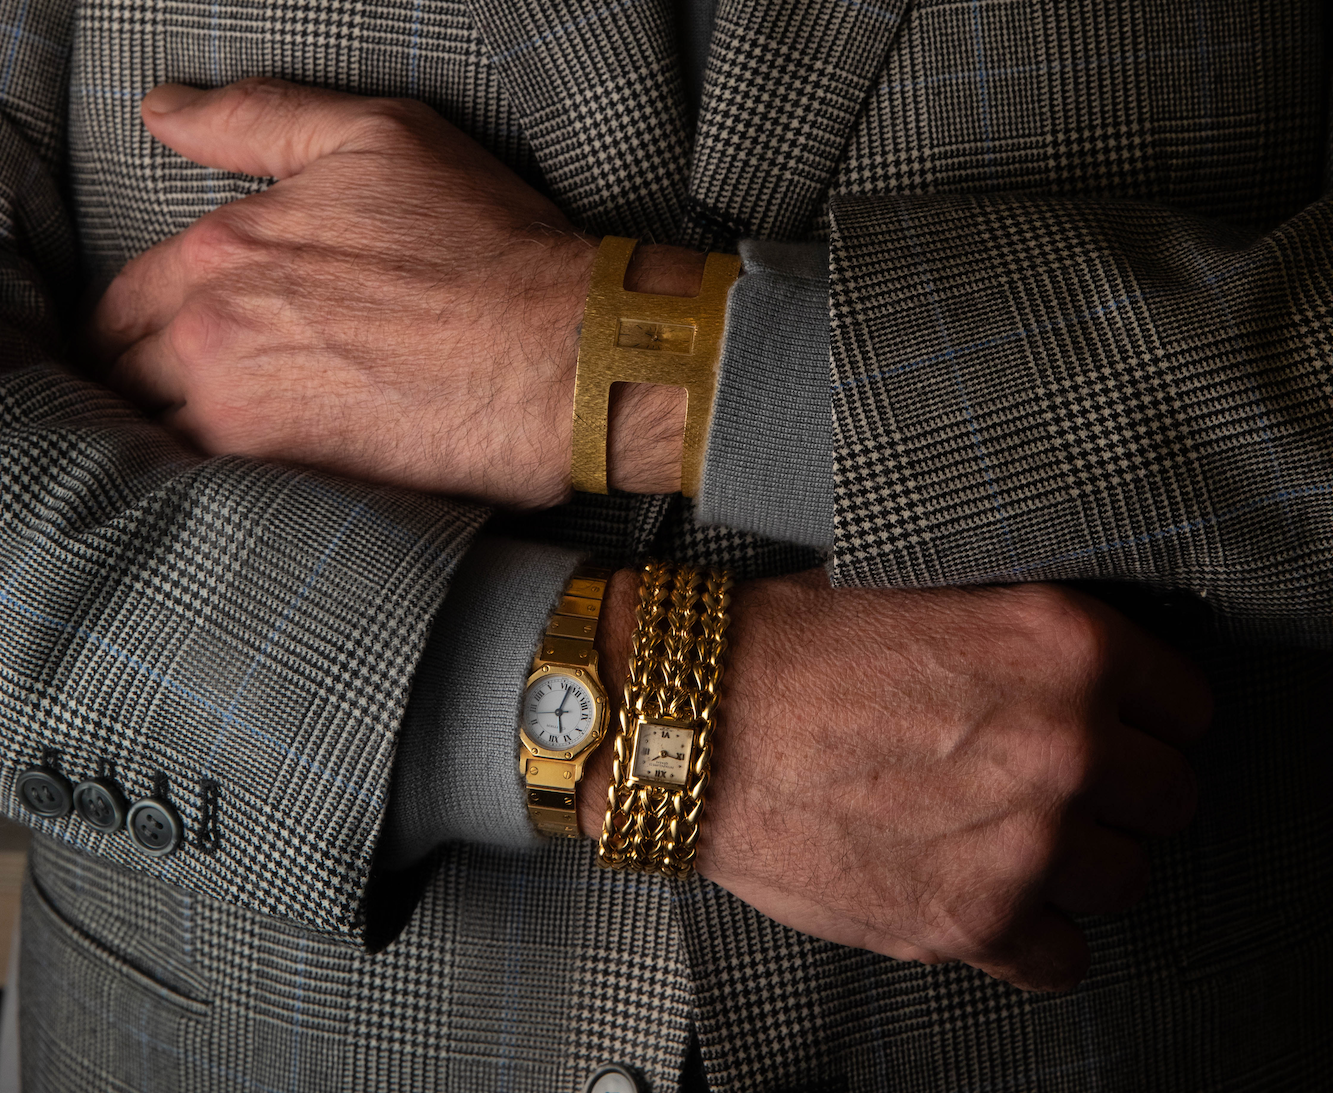 Max Bernardini wearing JCL, Cartier and Patek Philippe watches